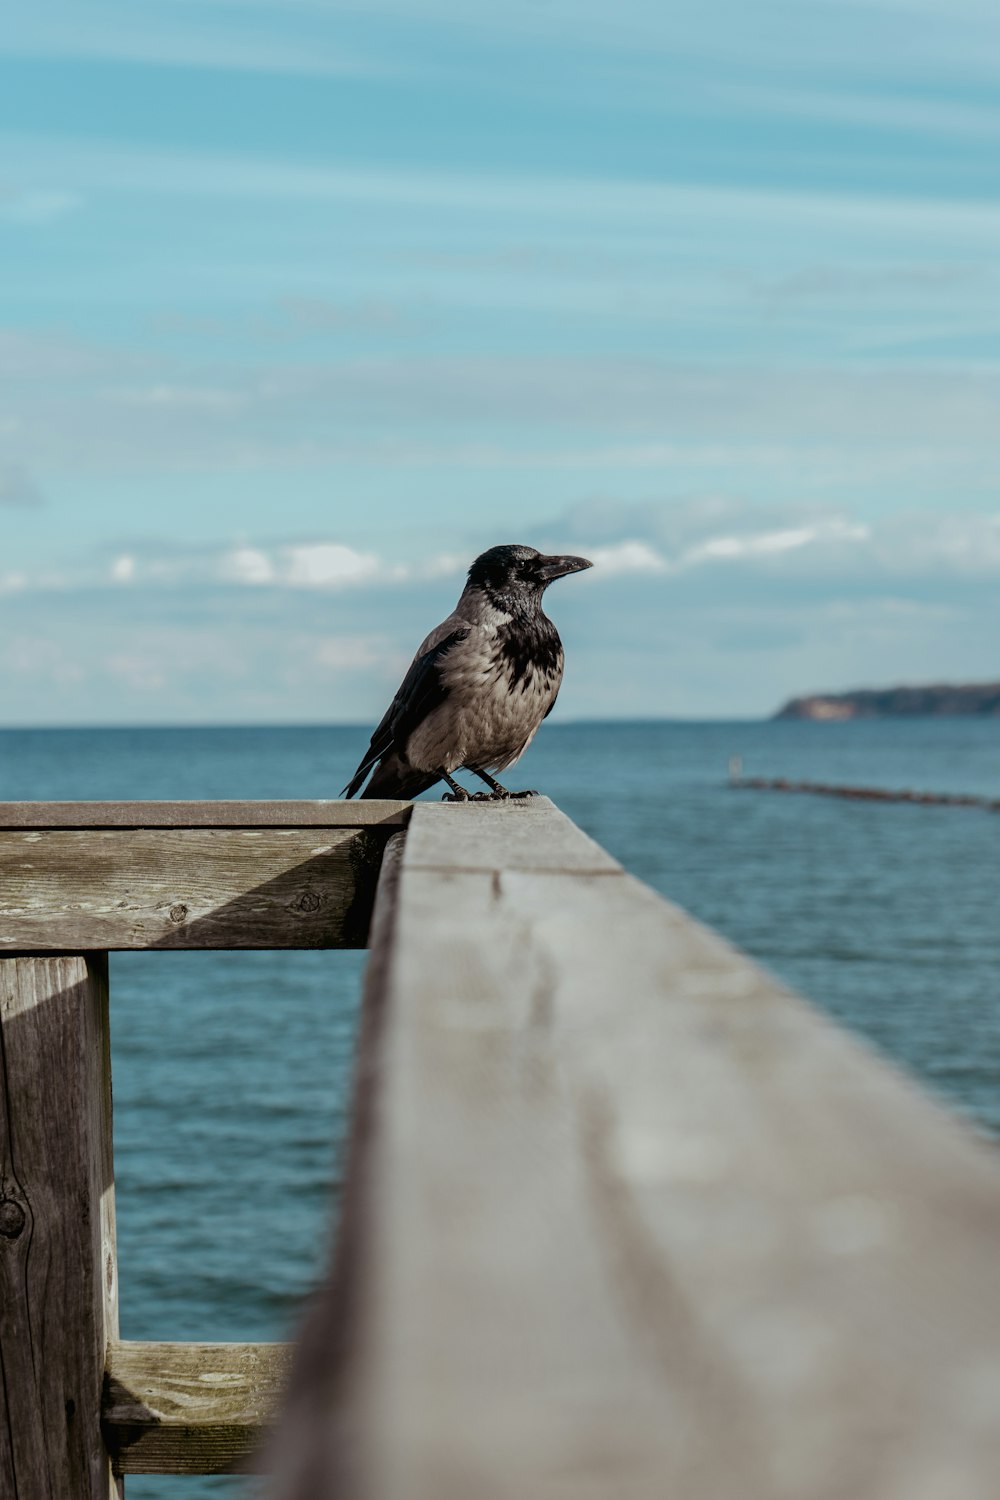 a black bird sitting on a wooden pier